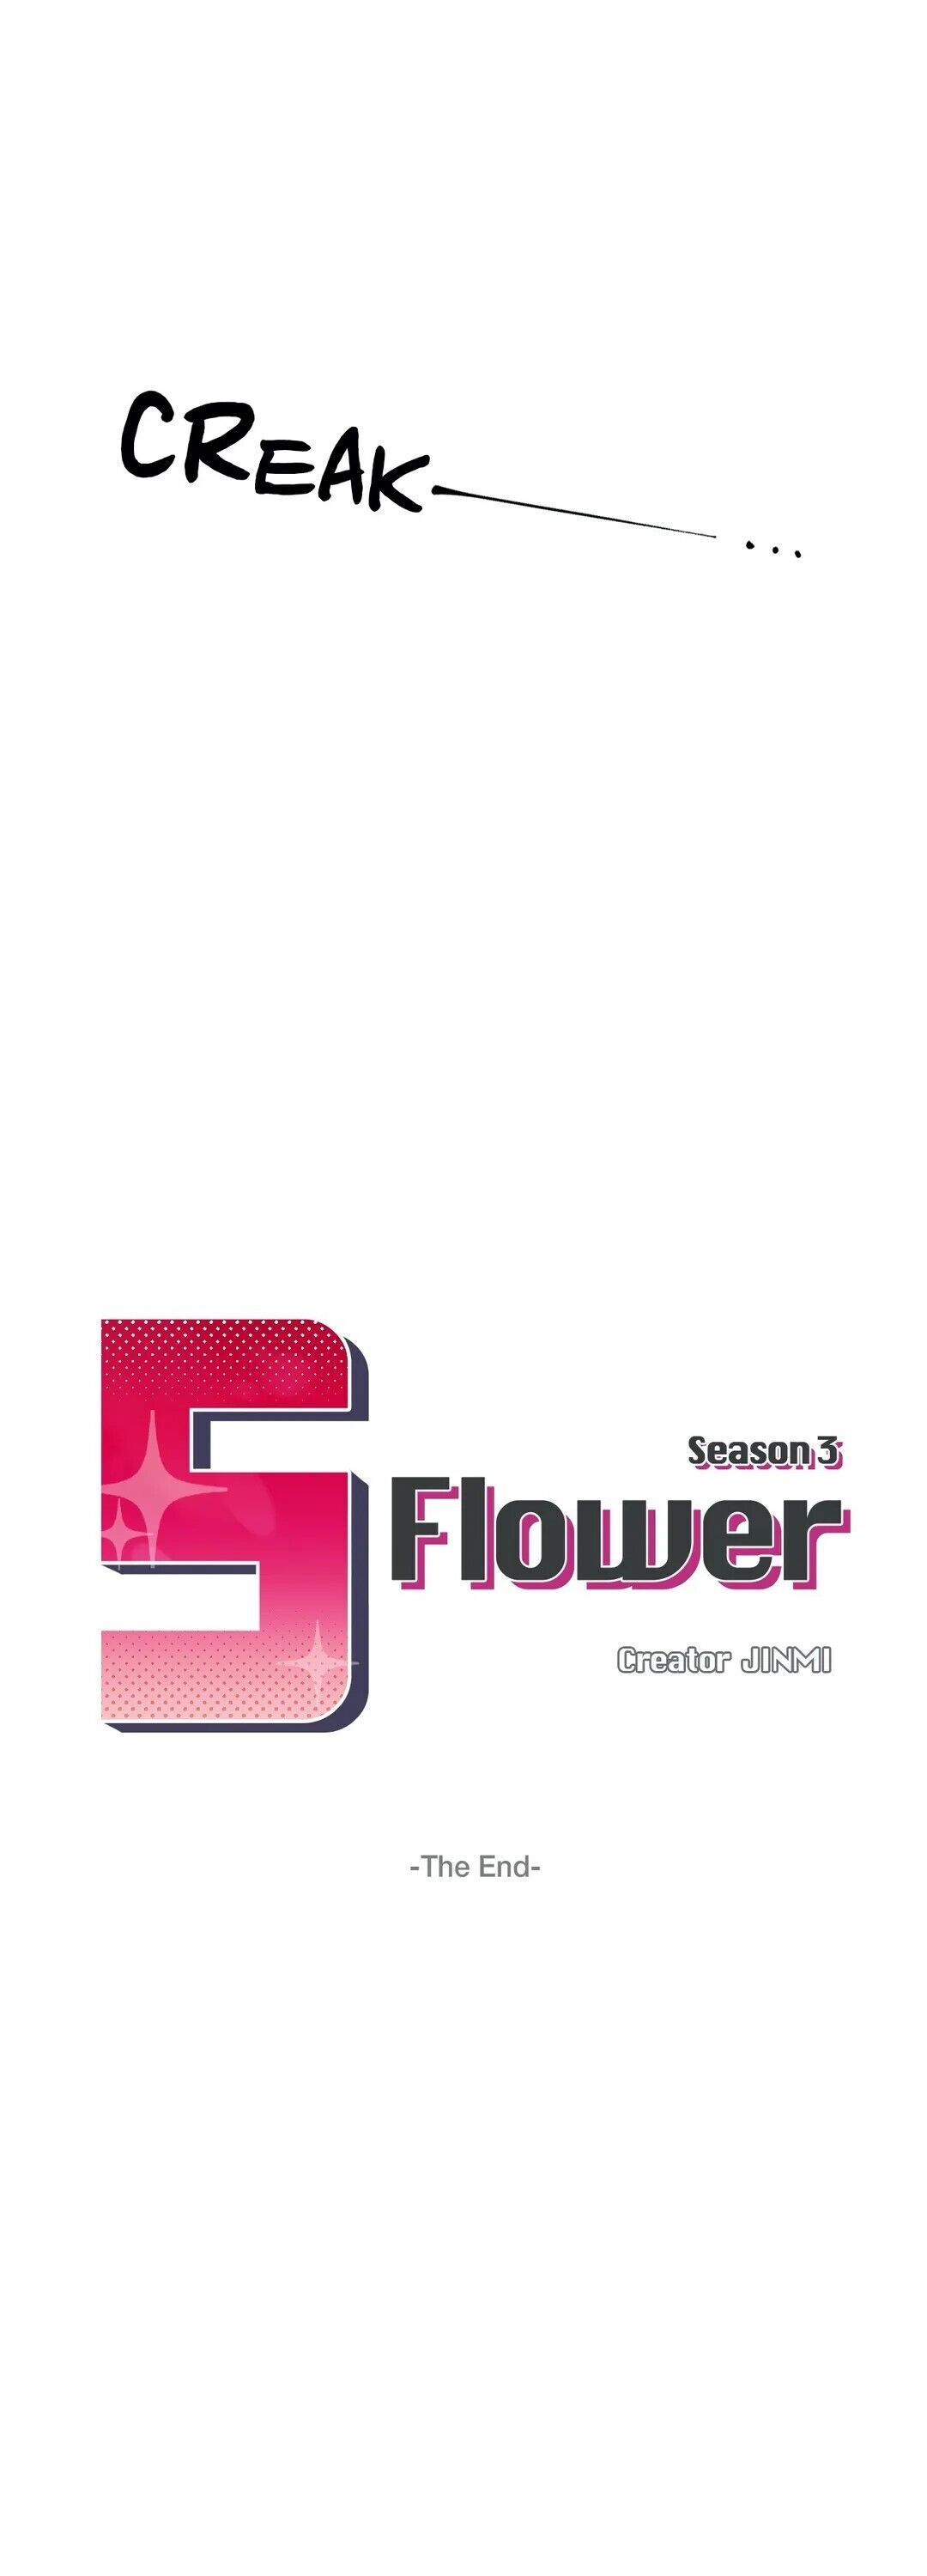 S Flower image